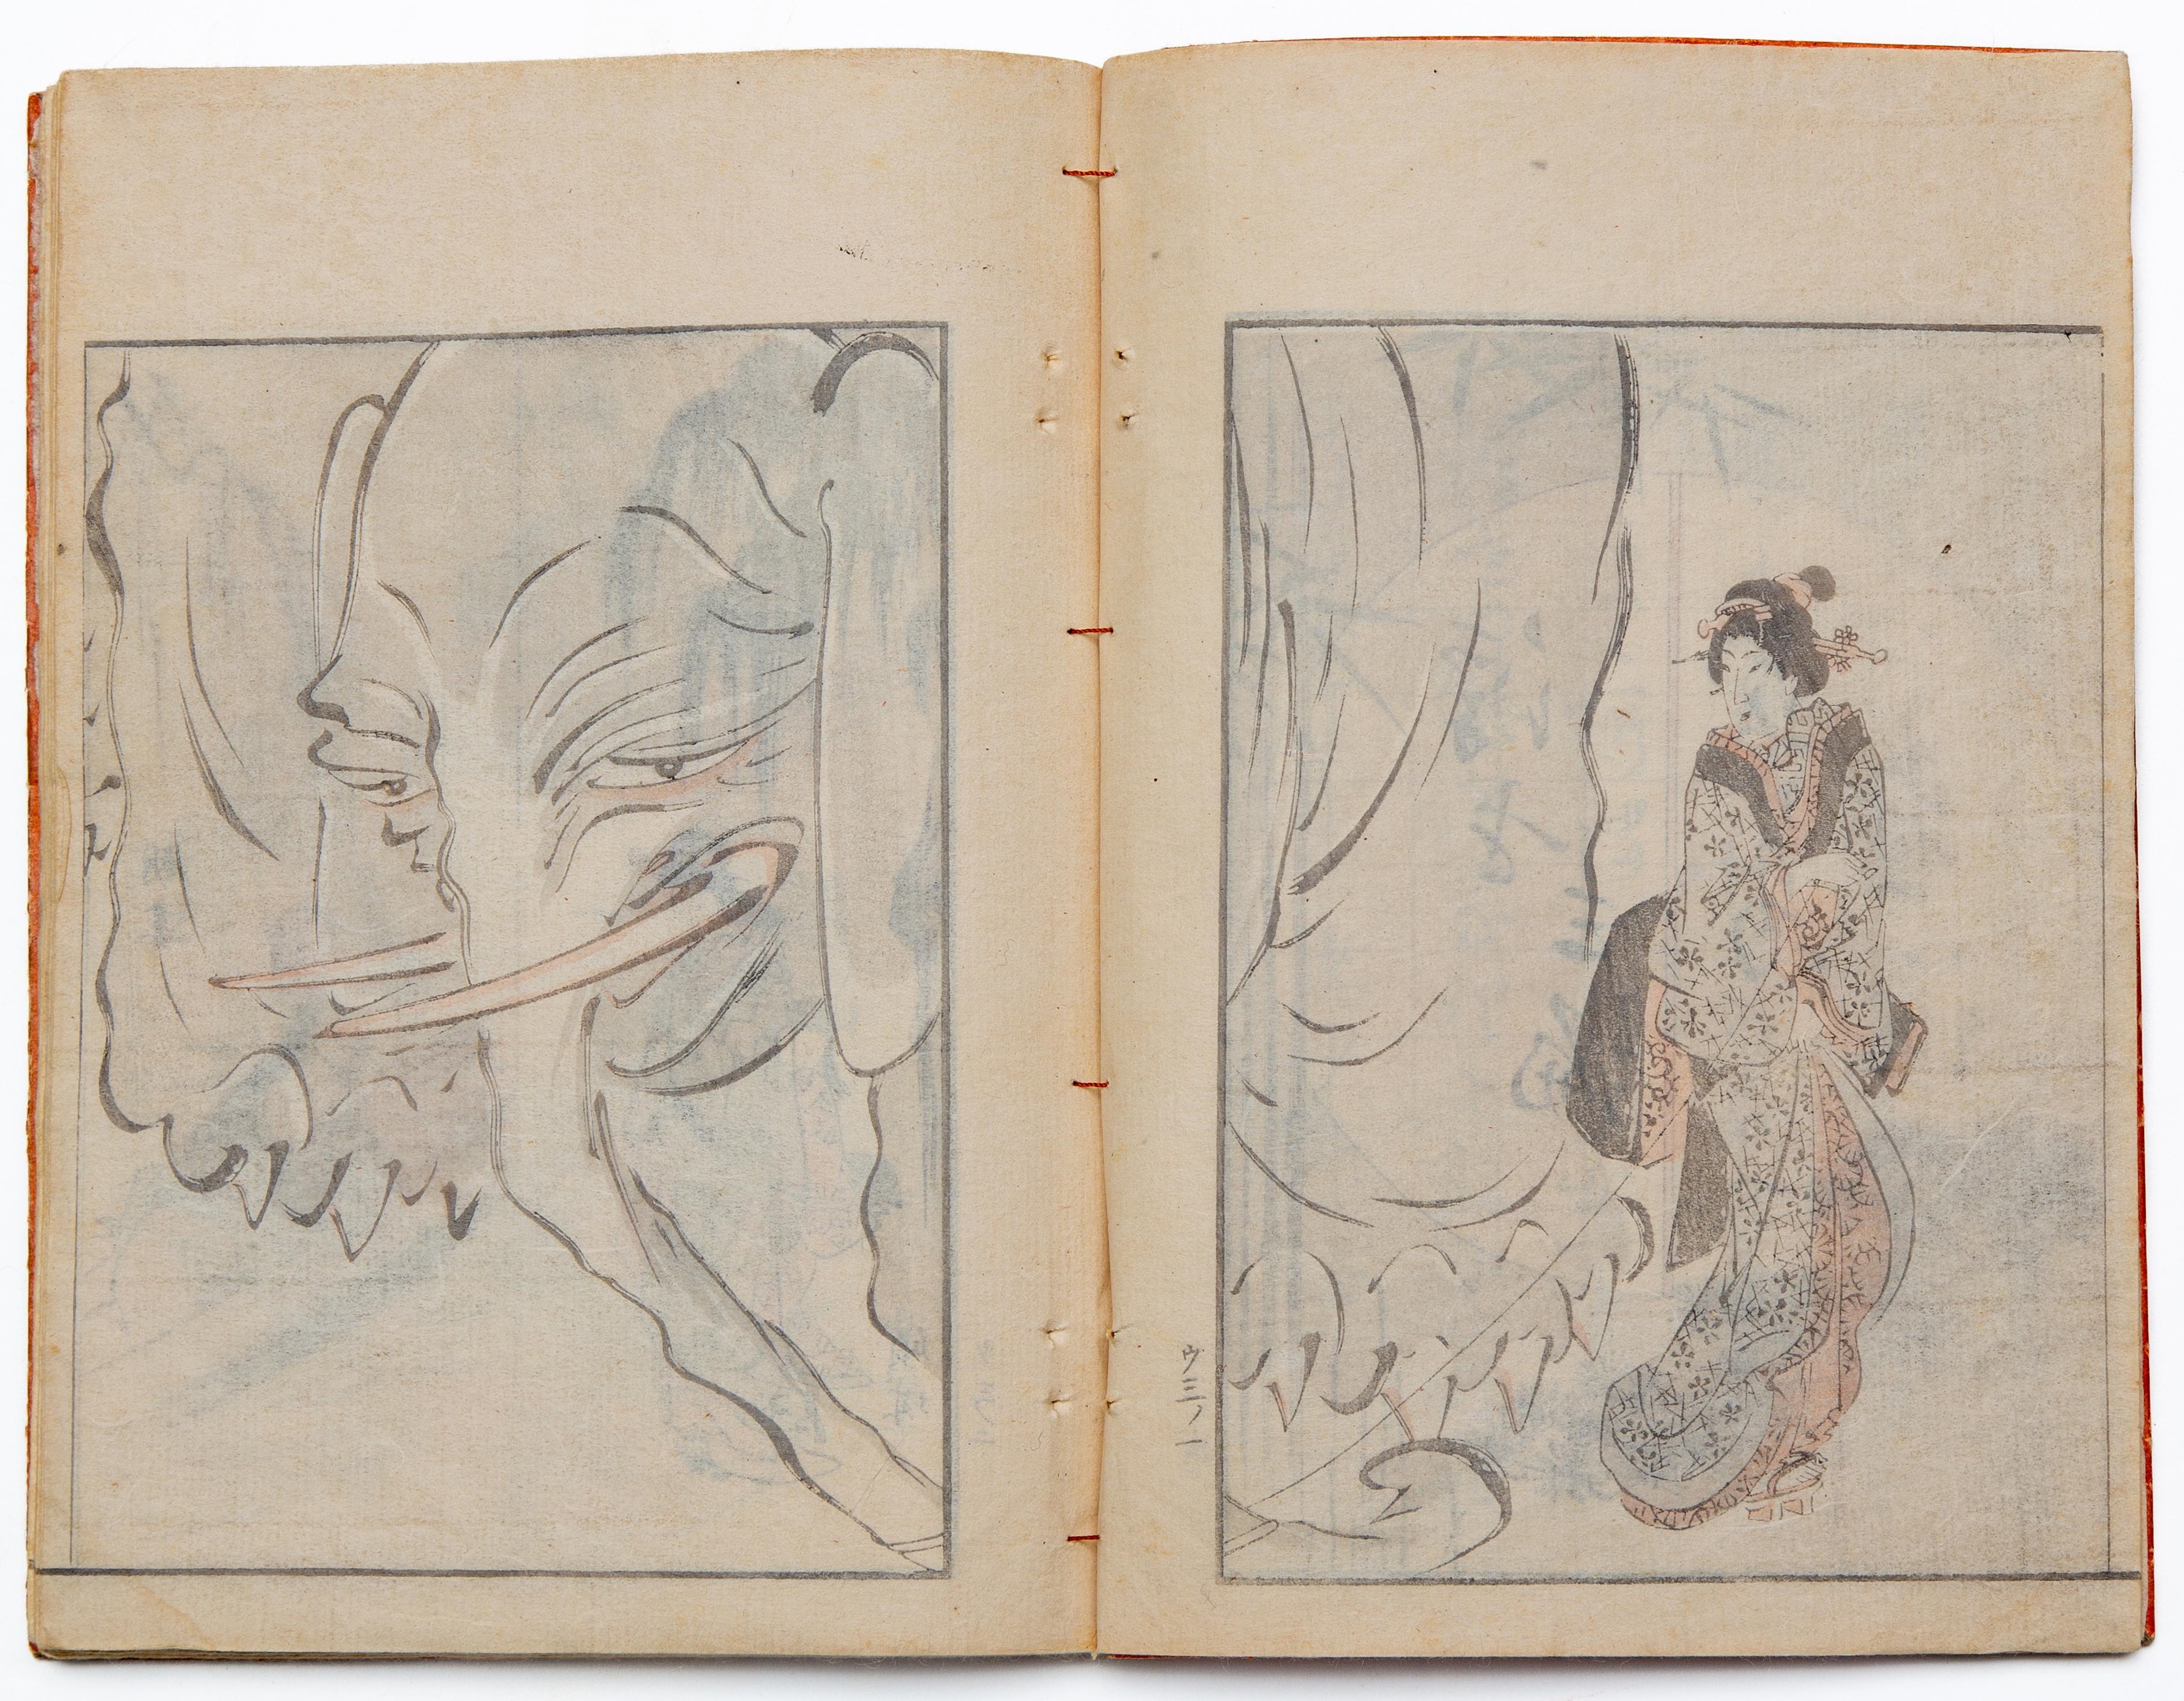 [JAPANESE PICTURE-BOOK] – HIROSHIGE, Utagawa (1797-1858). “Ukiyo Gafu” (Picture Book of the Floating World).